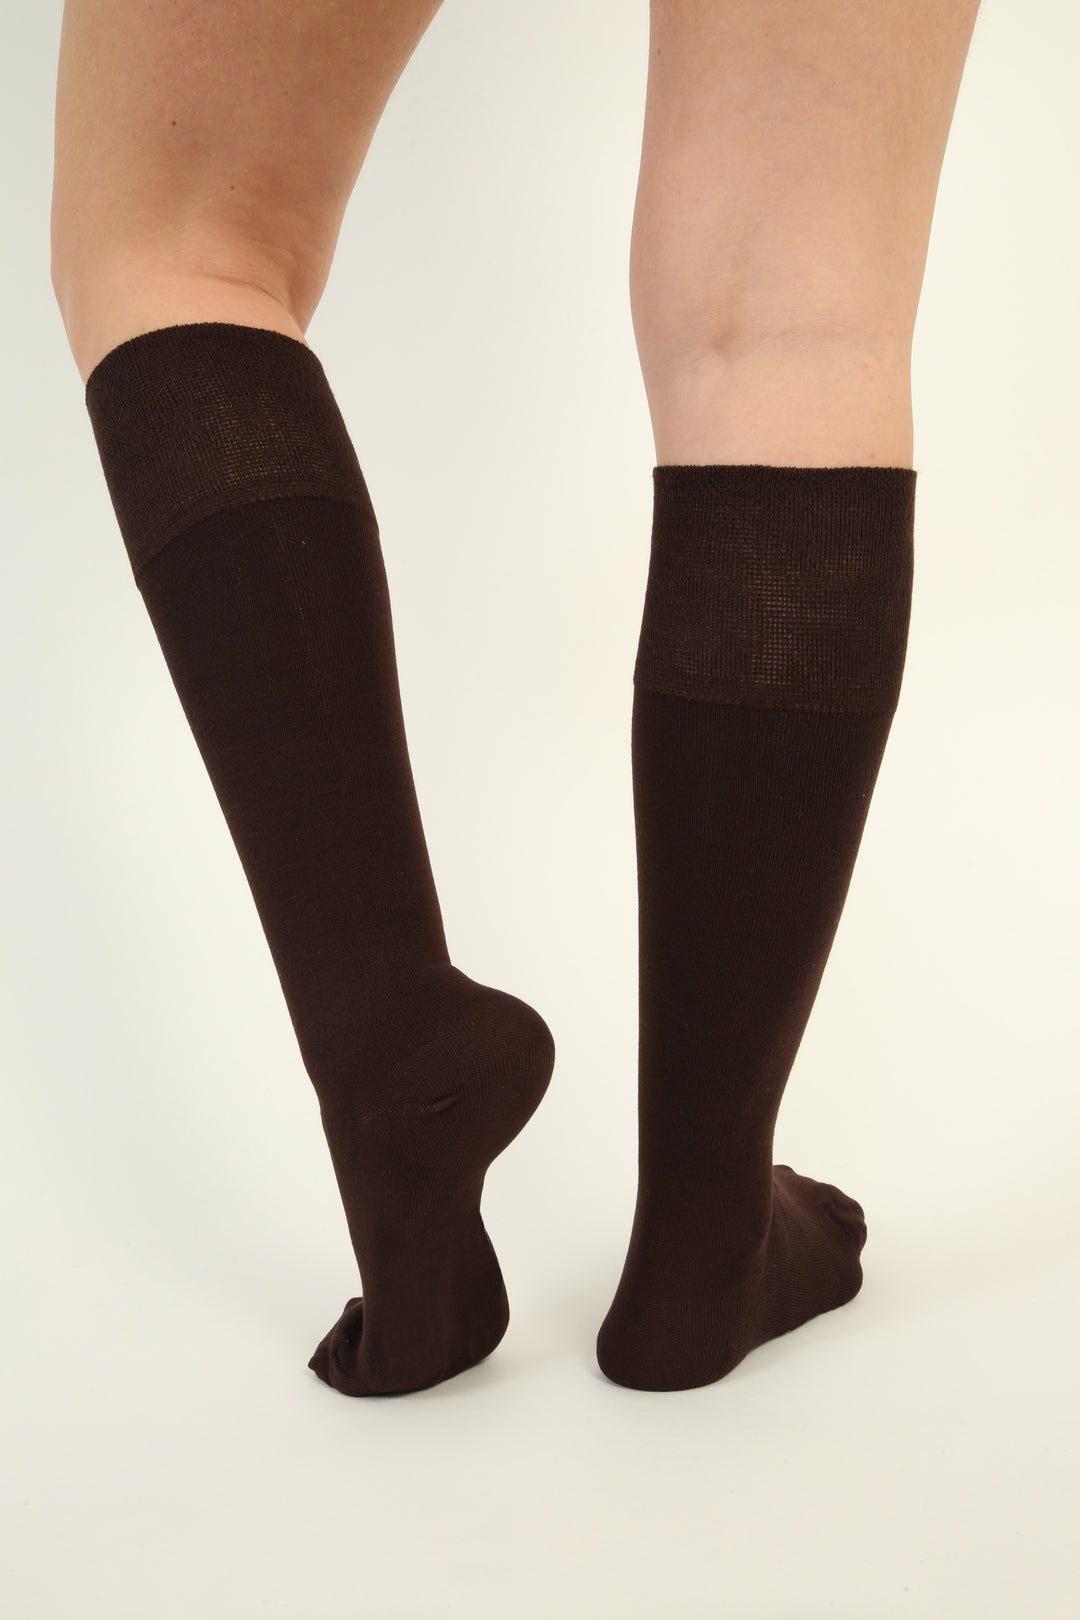 Brown Knee-High Seamless Bamboo Socks - 4 pairs